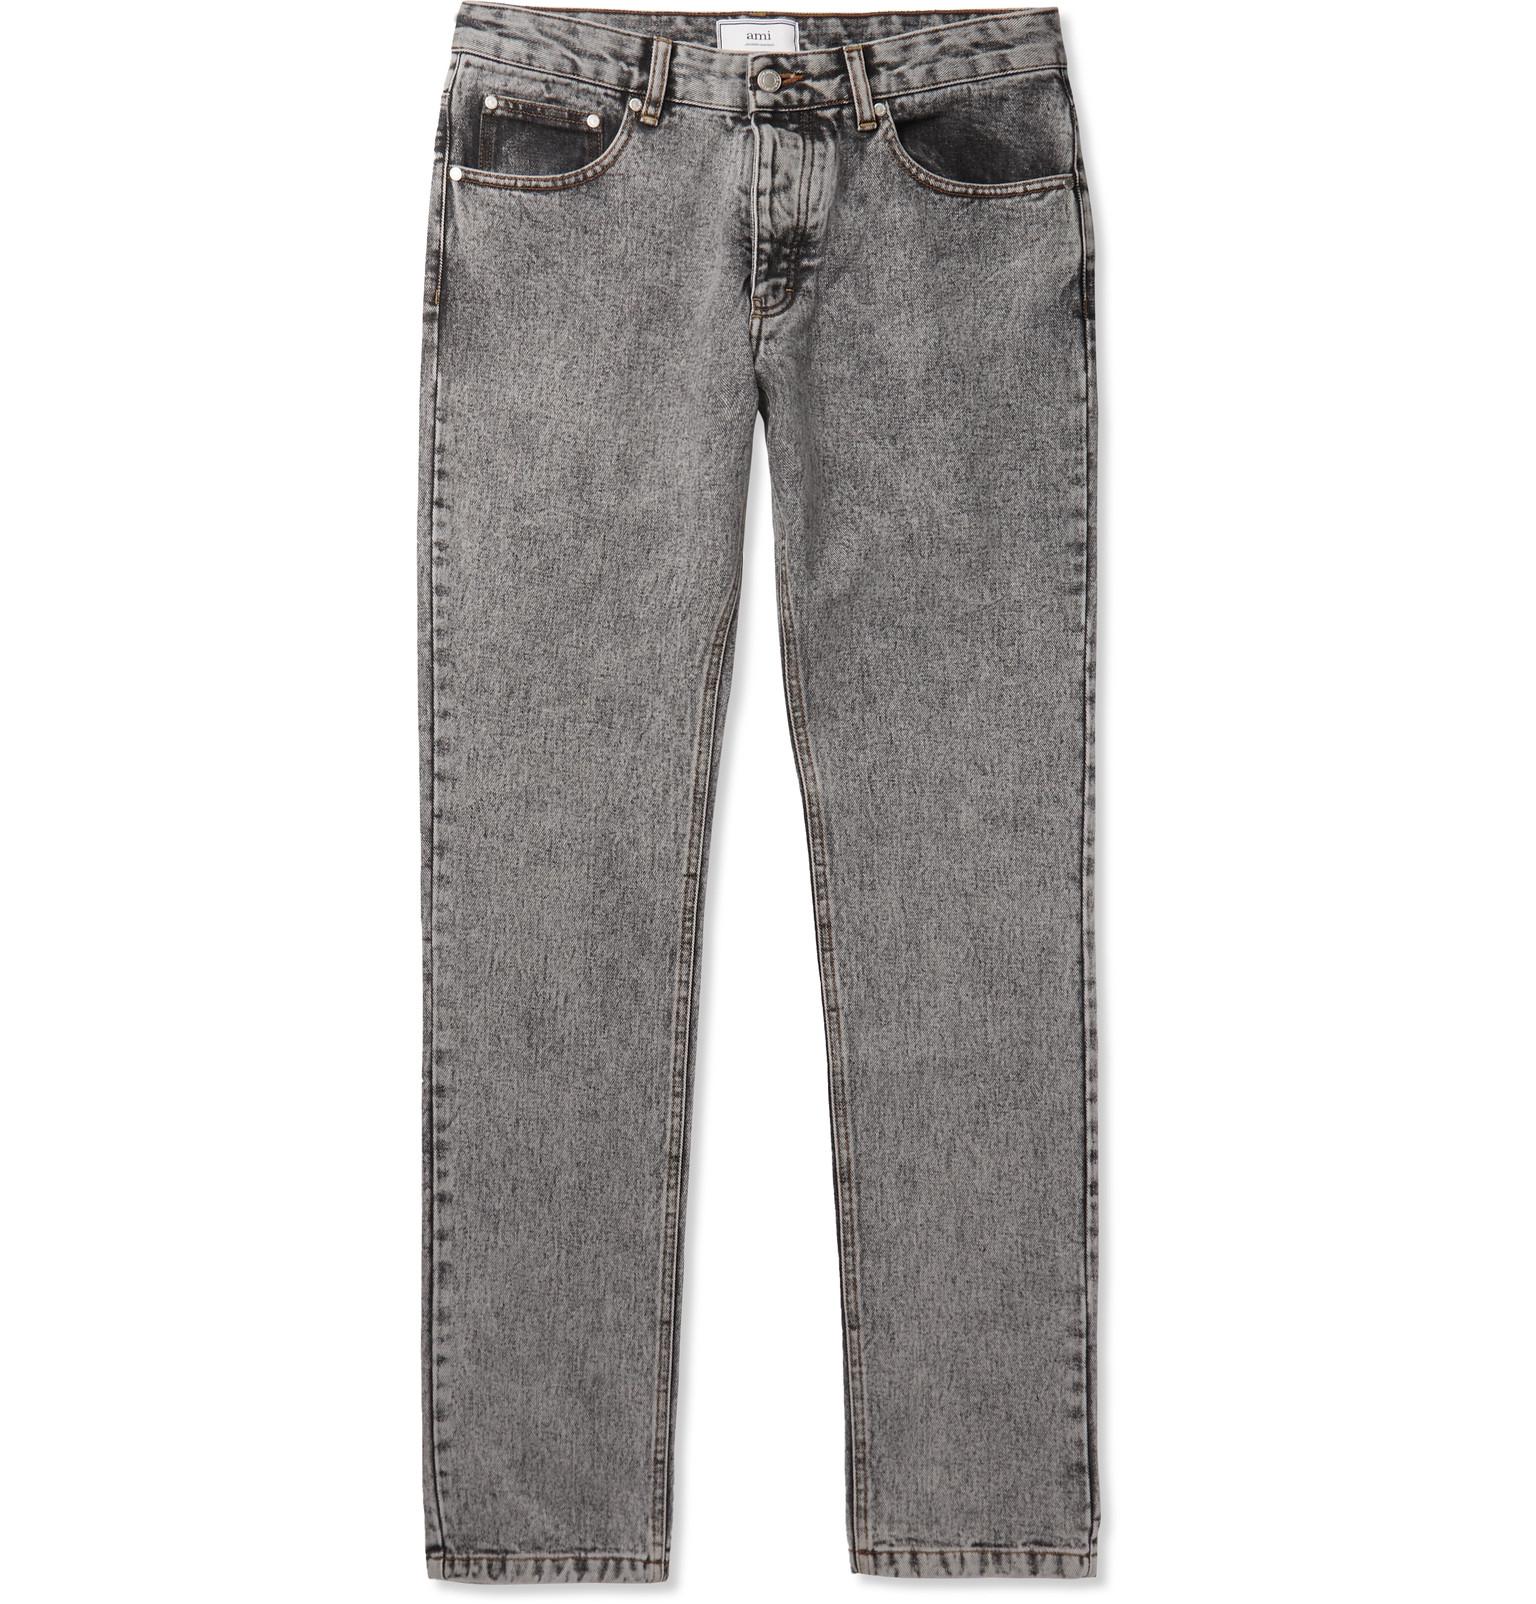 AMI Slim-fit Denim Jeans in Gray for Men - Lyst